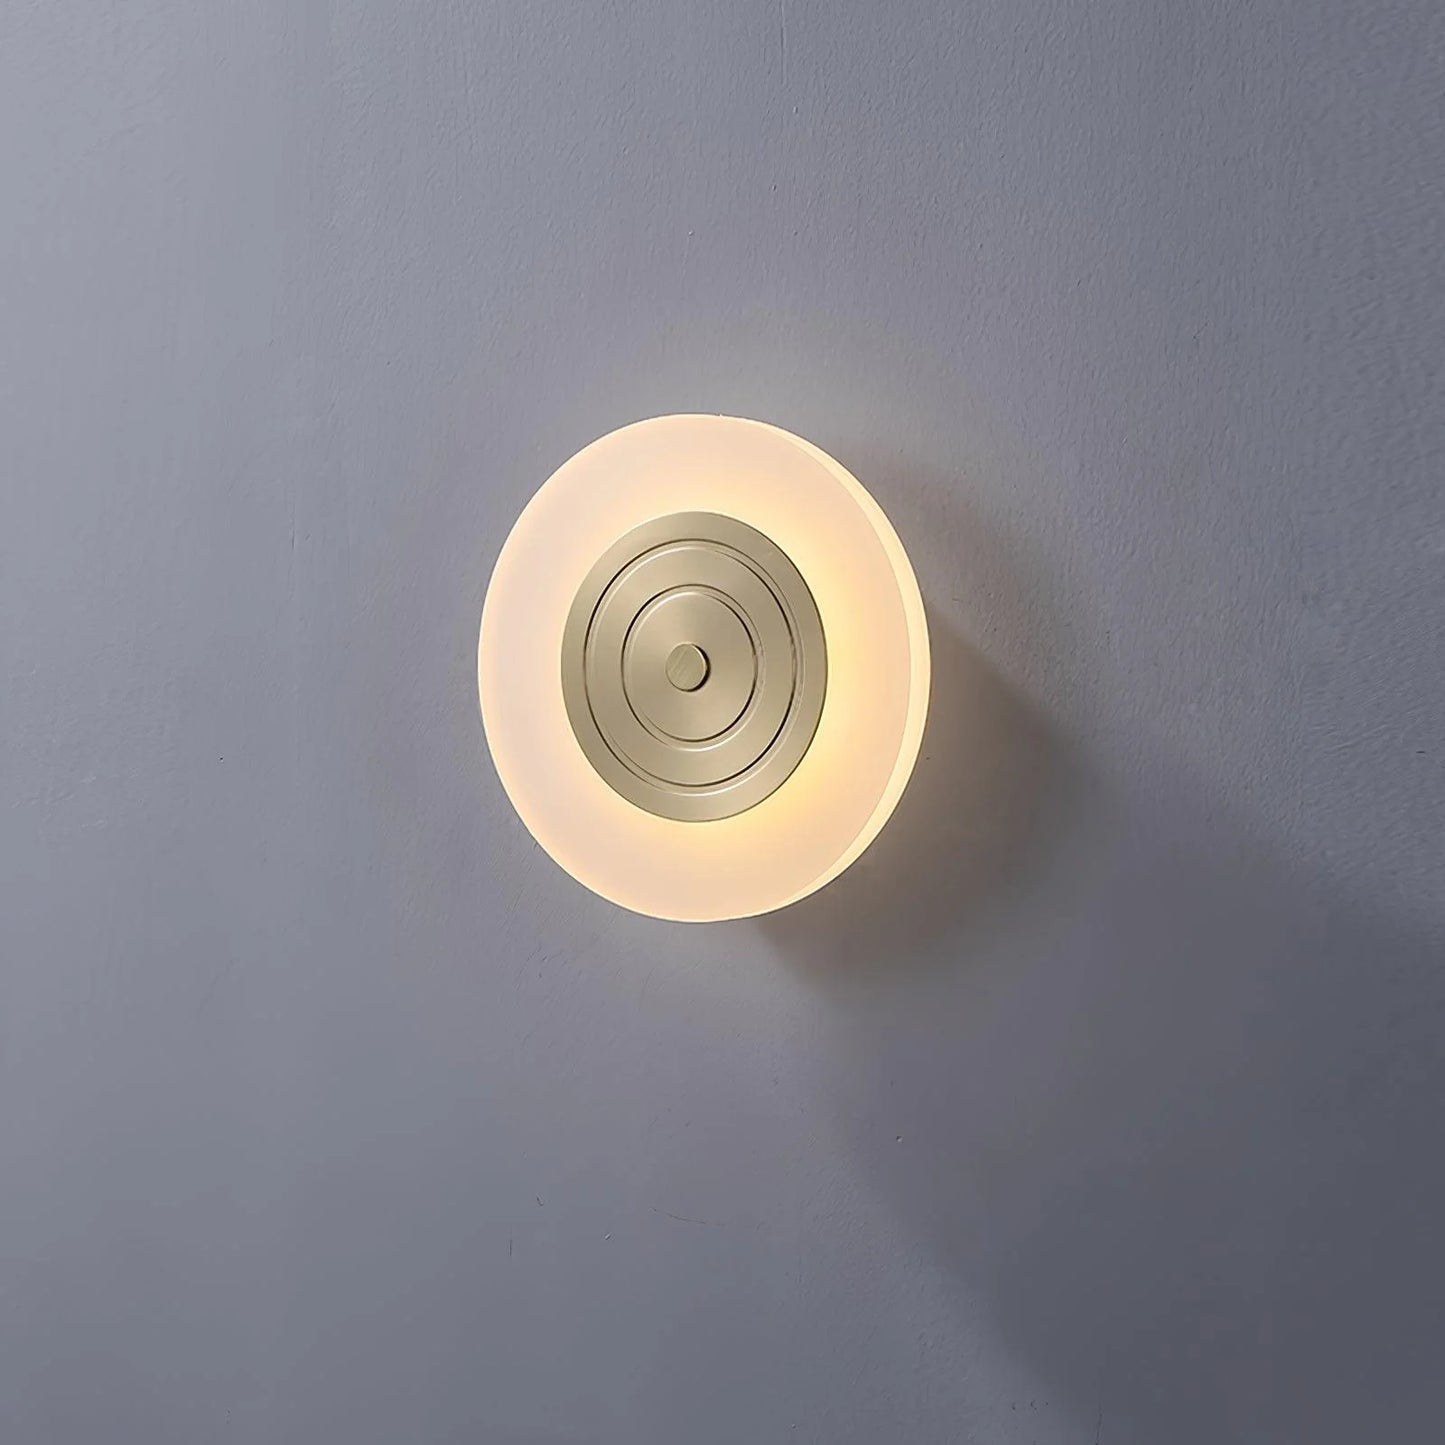 Disc Wall Lamp